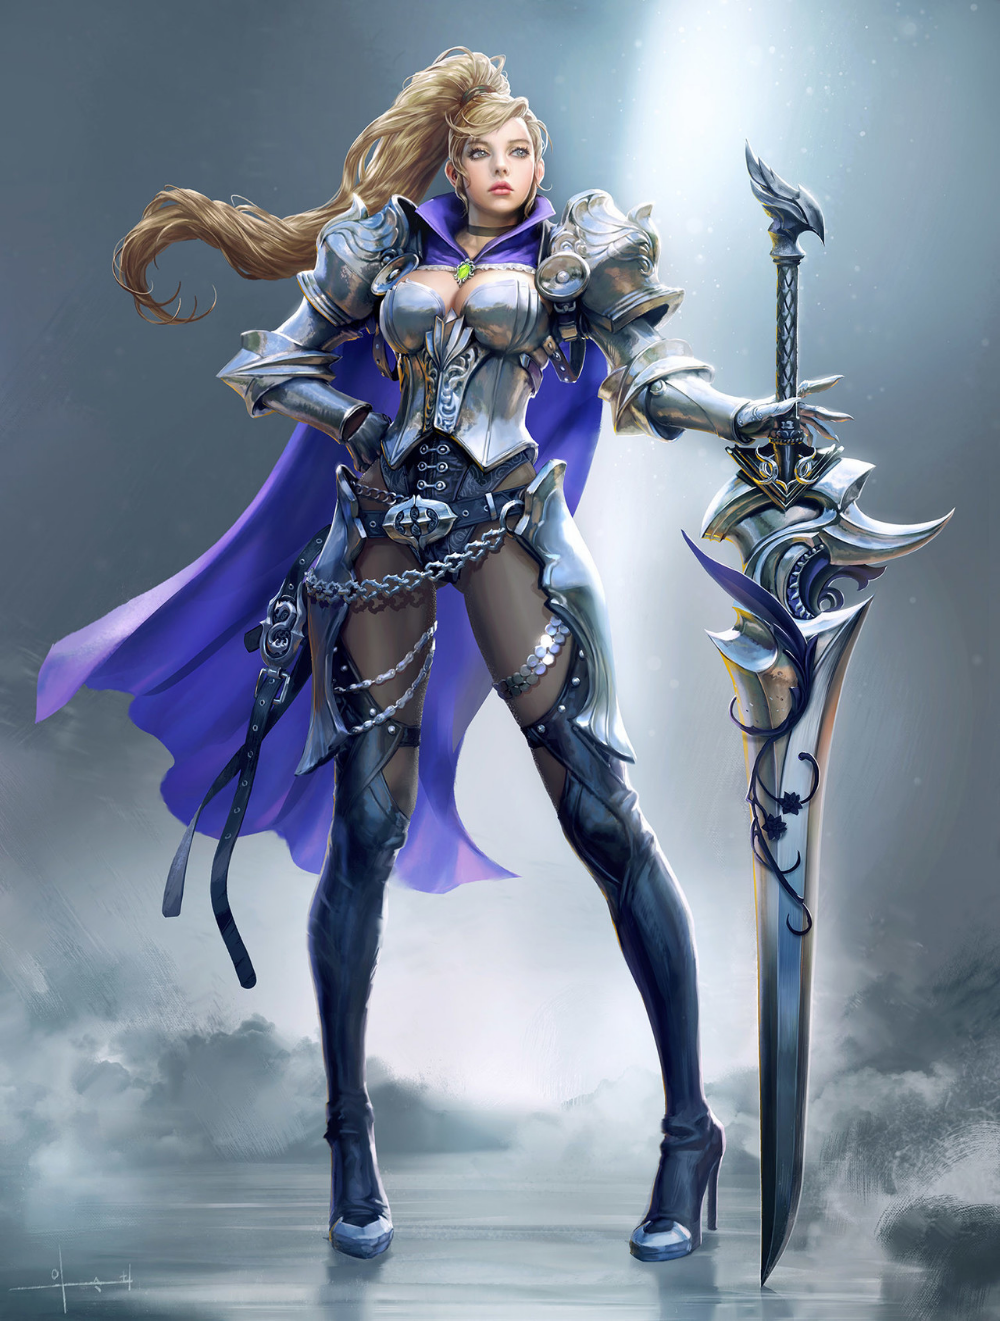 Cyberdelics Photo Fantasy Female Warrior Female Knight Character Art